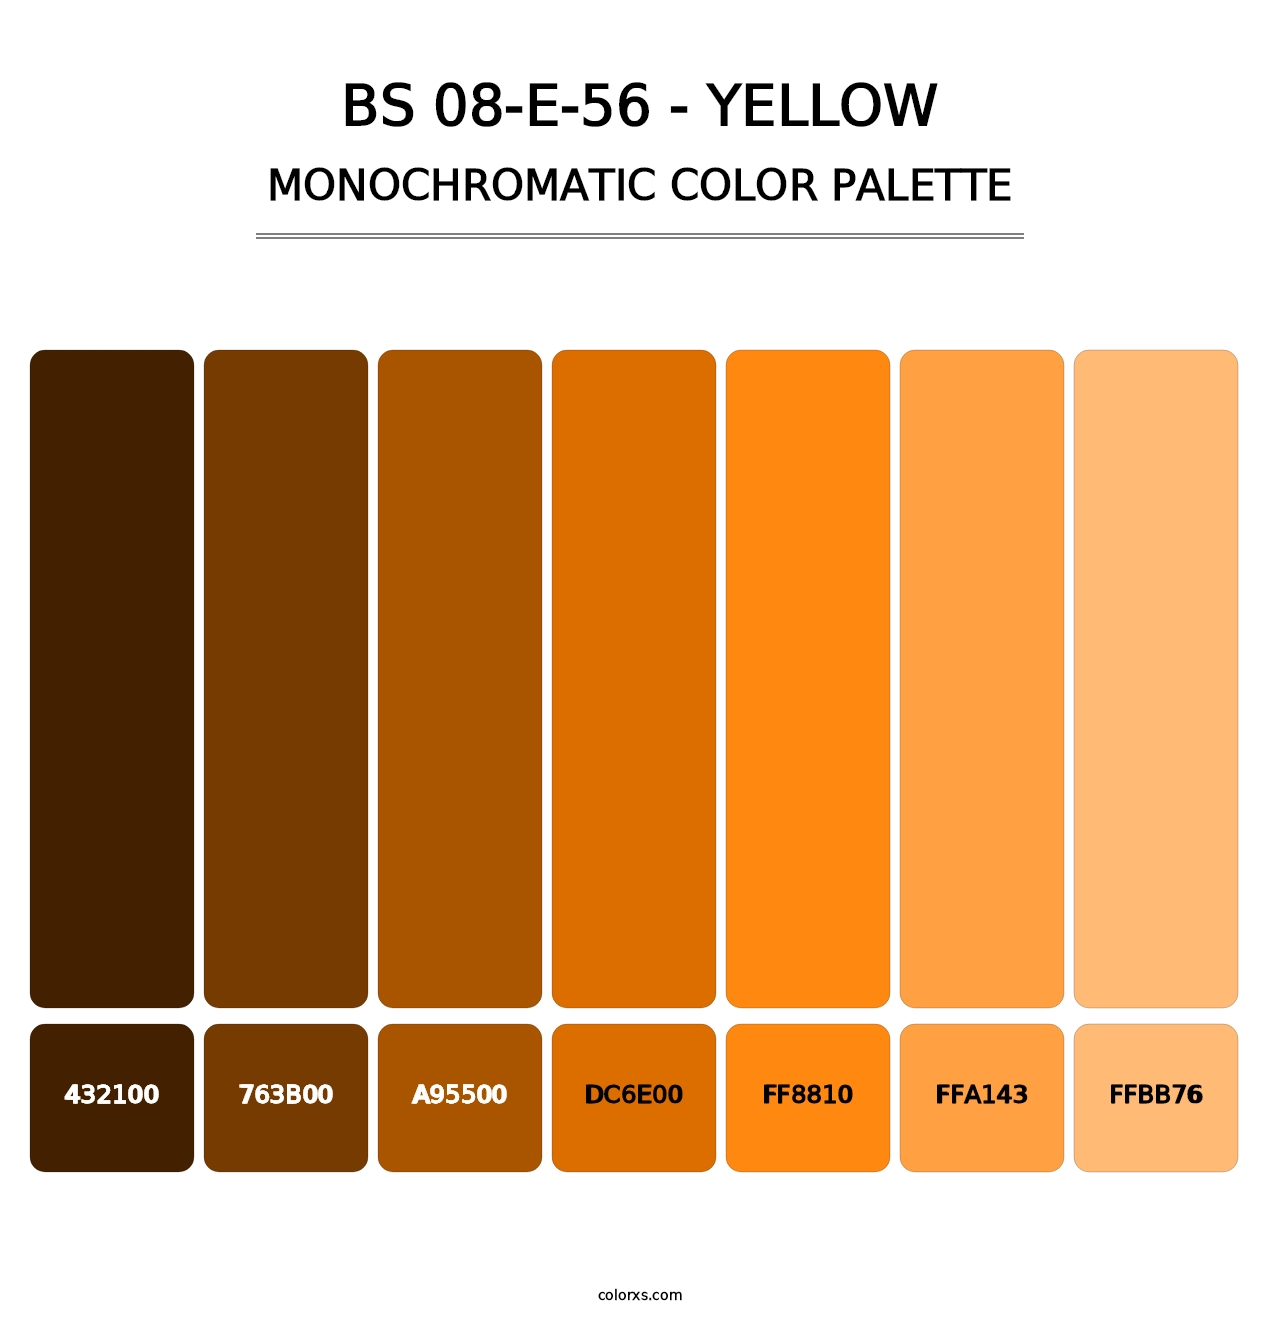 BS 08-E-56 - Yellow - Monochromatic Color Palette